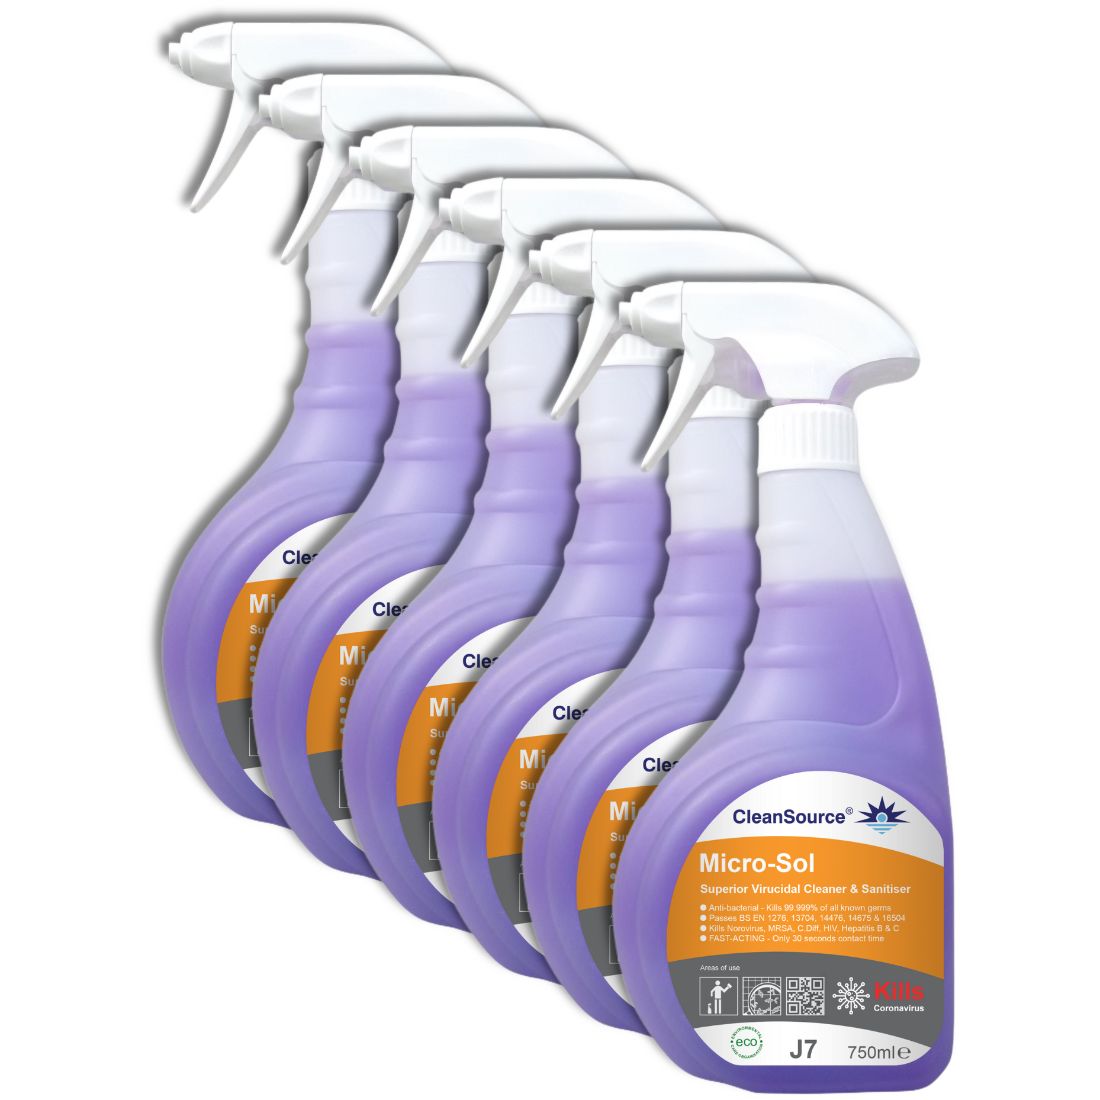 CleanSource® MICRO-SOL Virucidal COVID Cleaner & Sanitiser